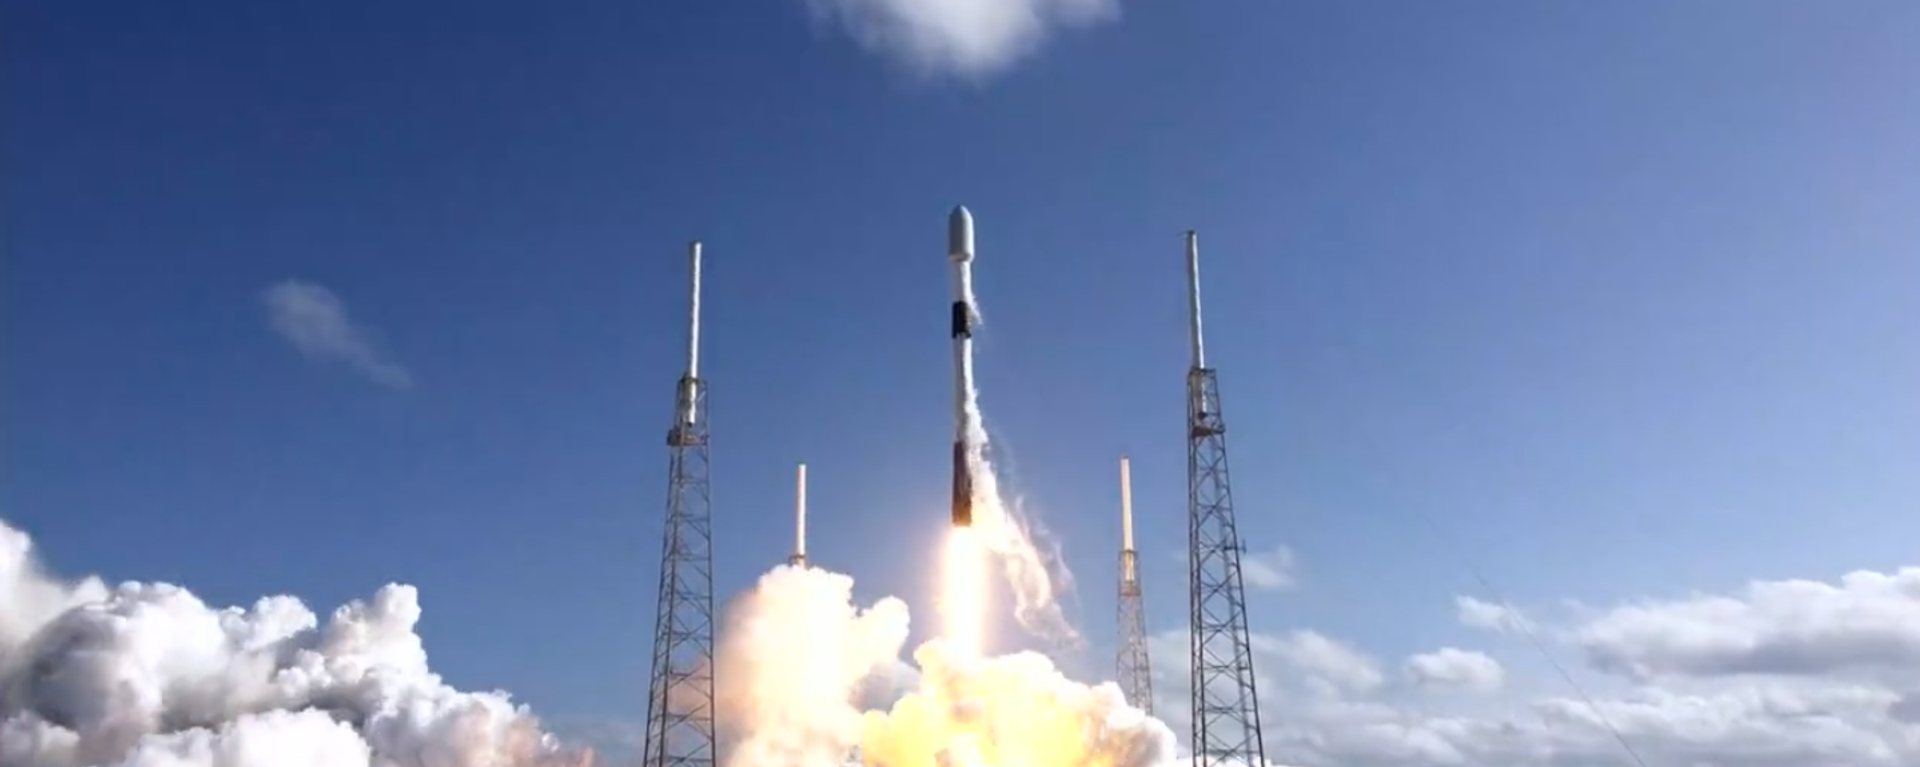 Falcon 9 launches 53 Starlink satellites to orbit on April 29, 2022 - Sputnik International, 1920, 29.04.2022